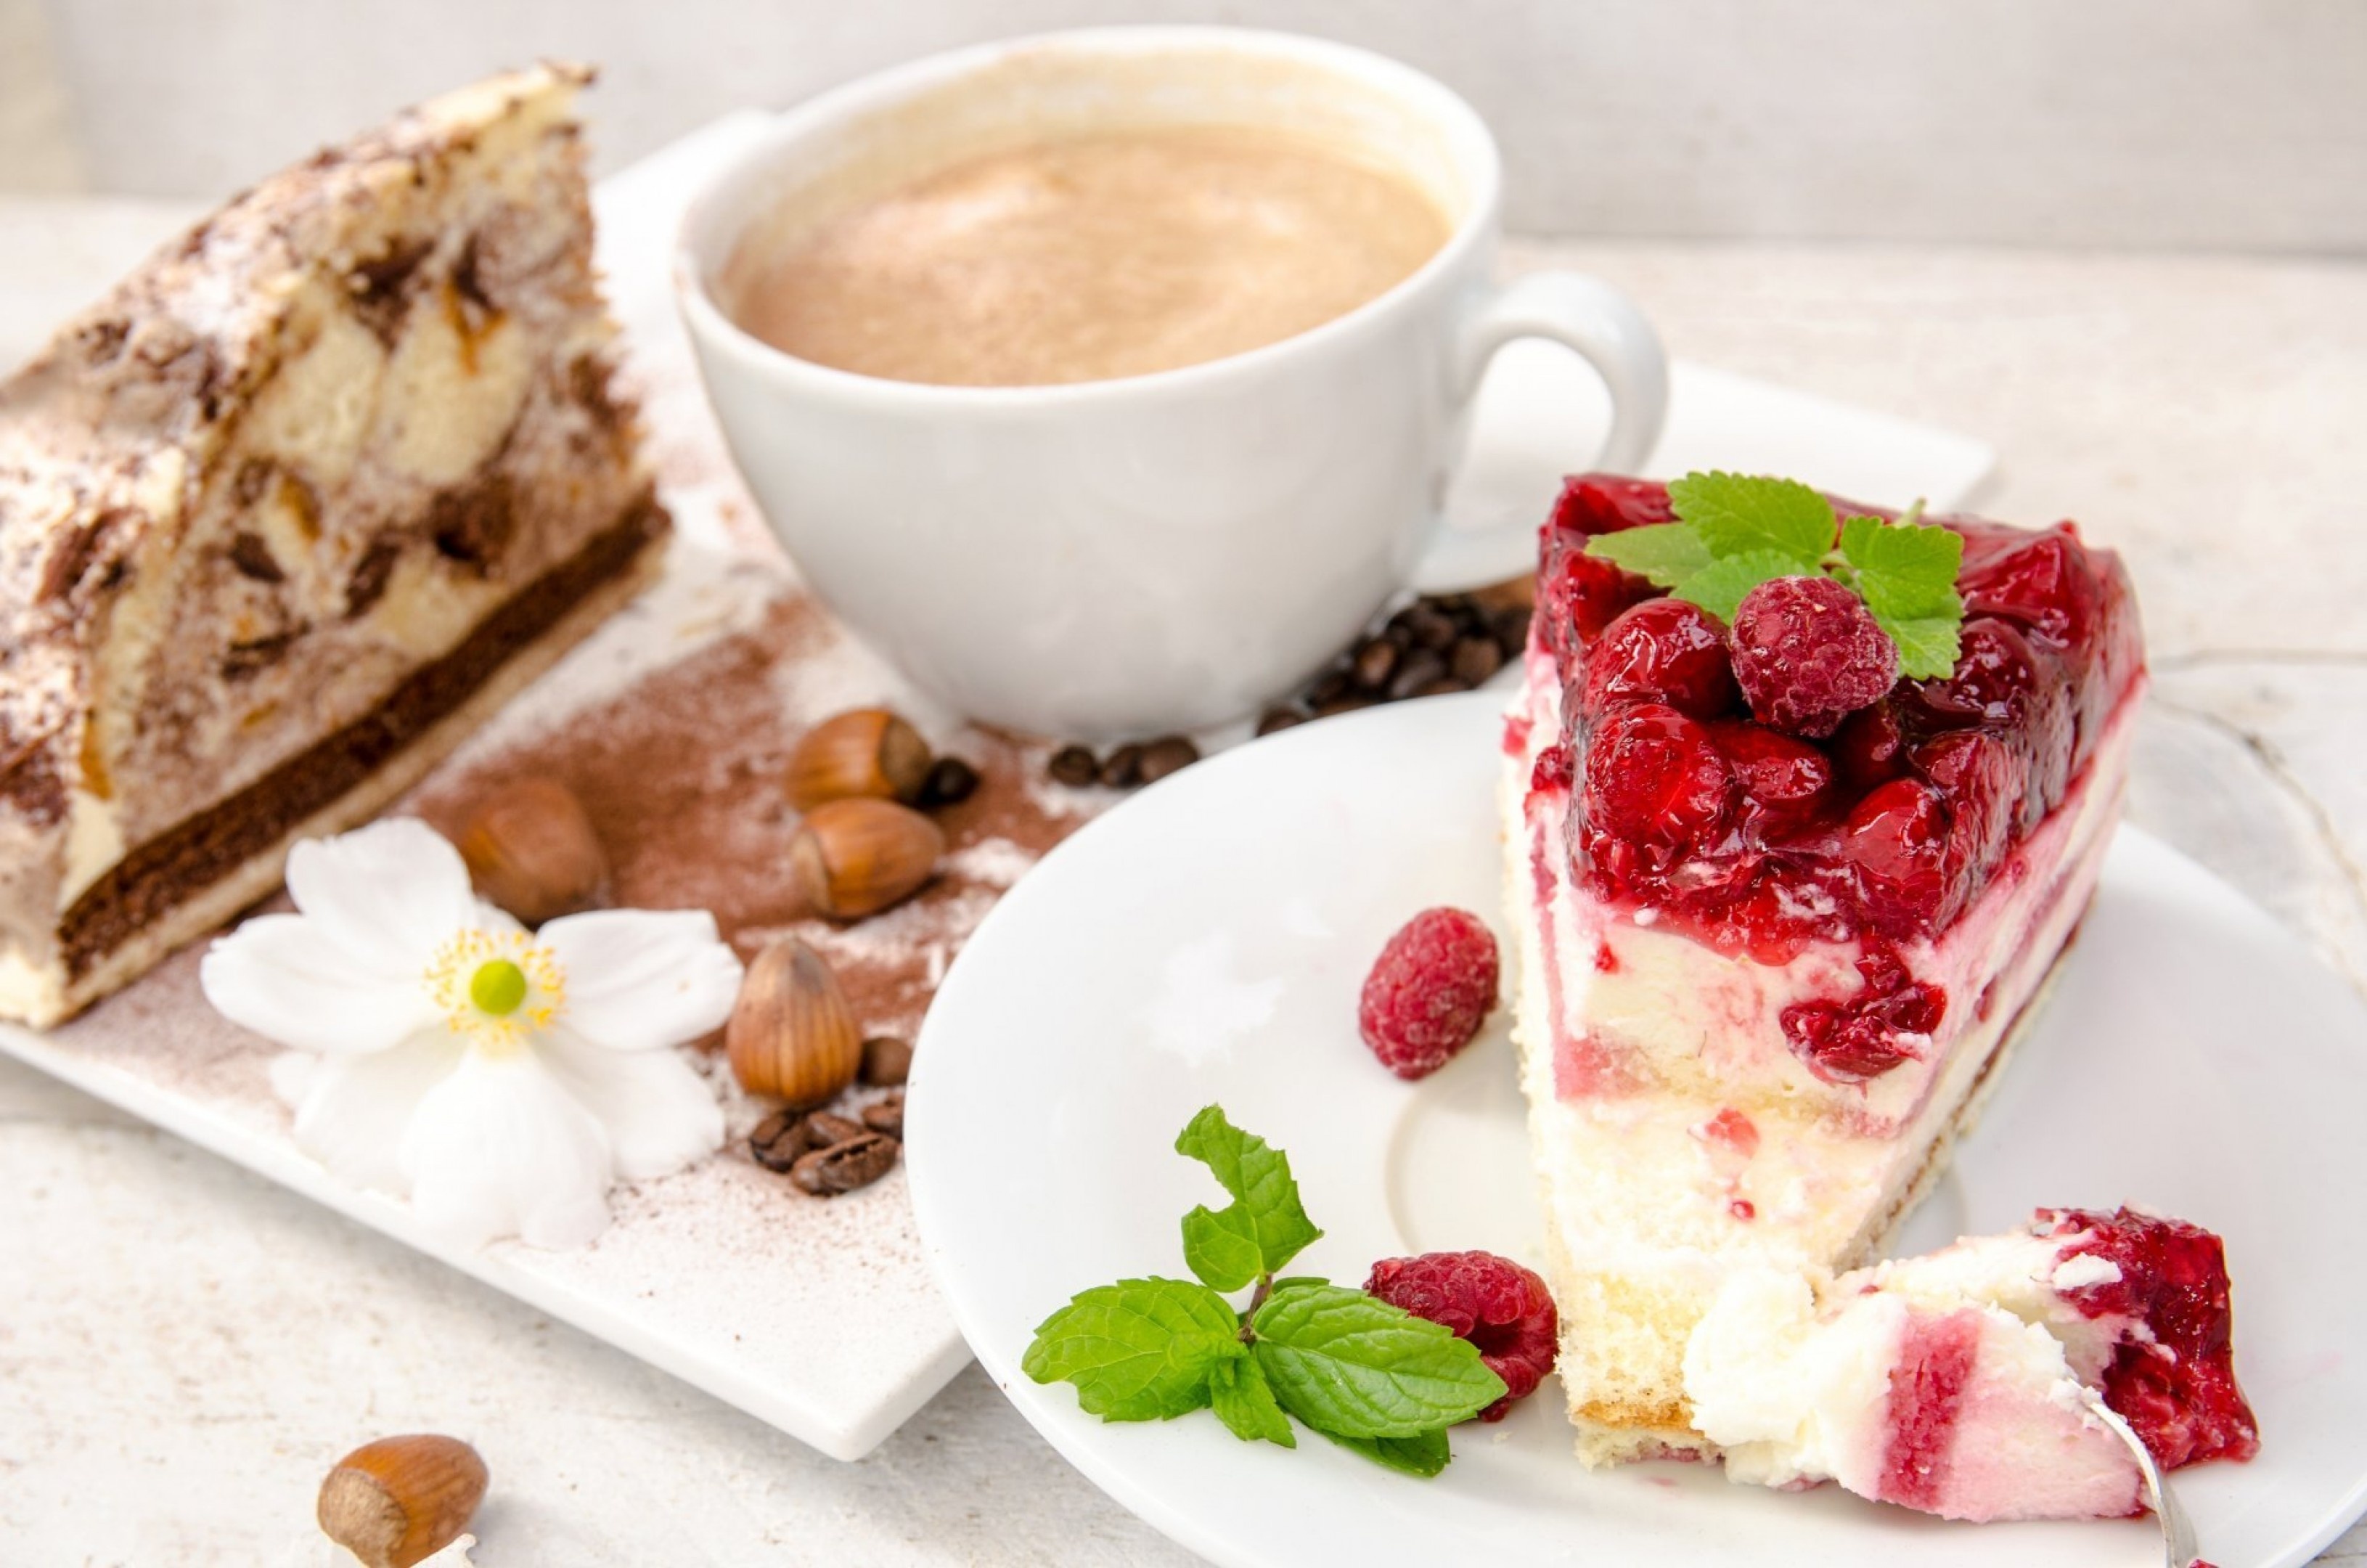 Cheesecake: Cake pieces, Dessert, Berries, Raspberry, Nuts, Coffee. 3270x2160 HD Wallpaper.